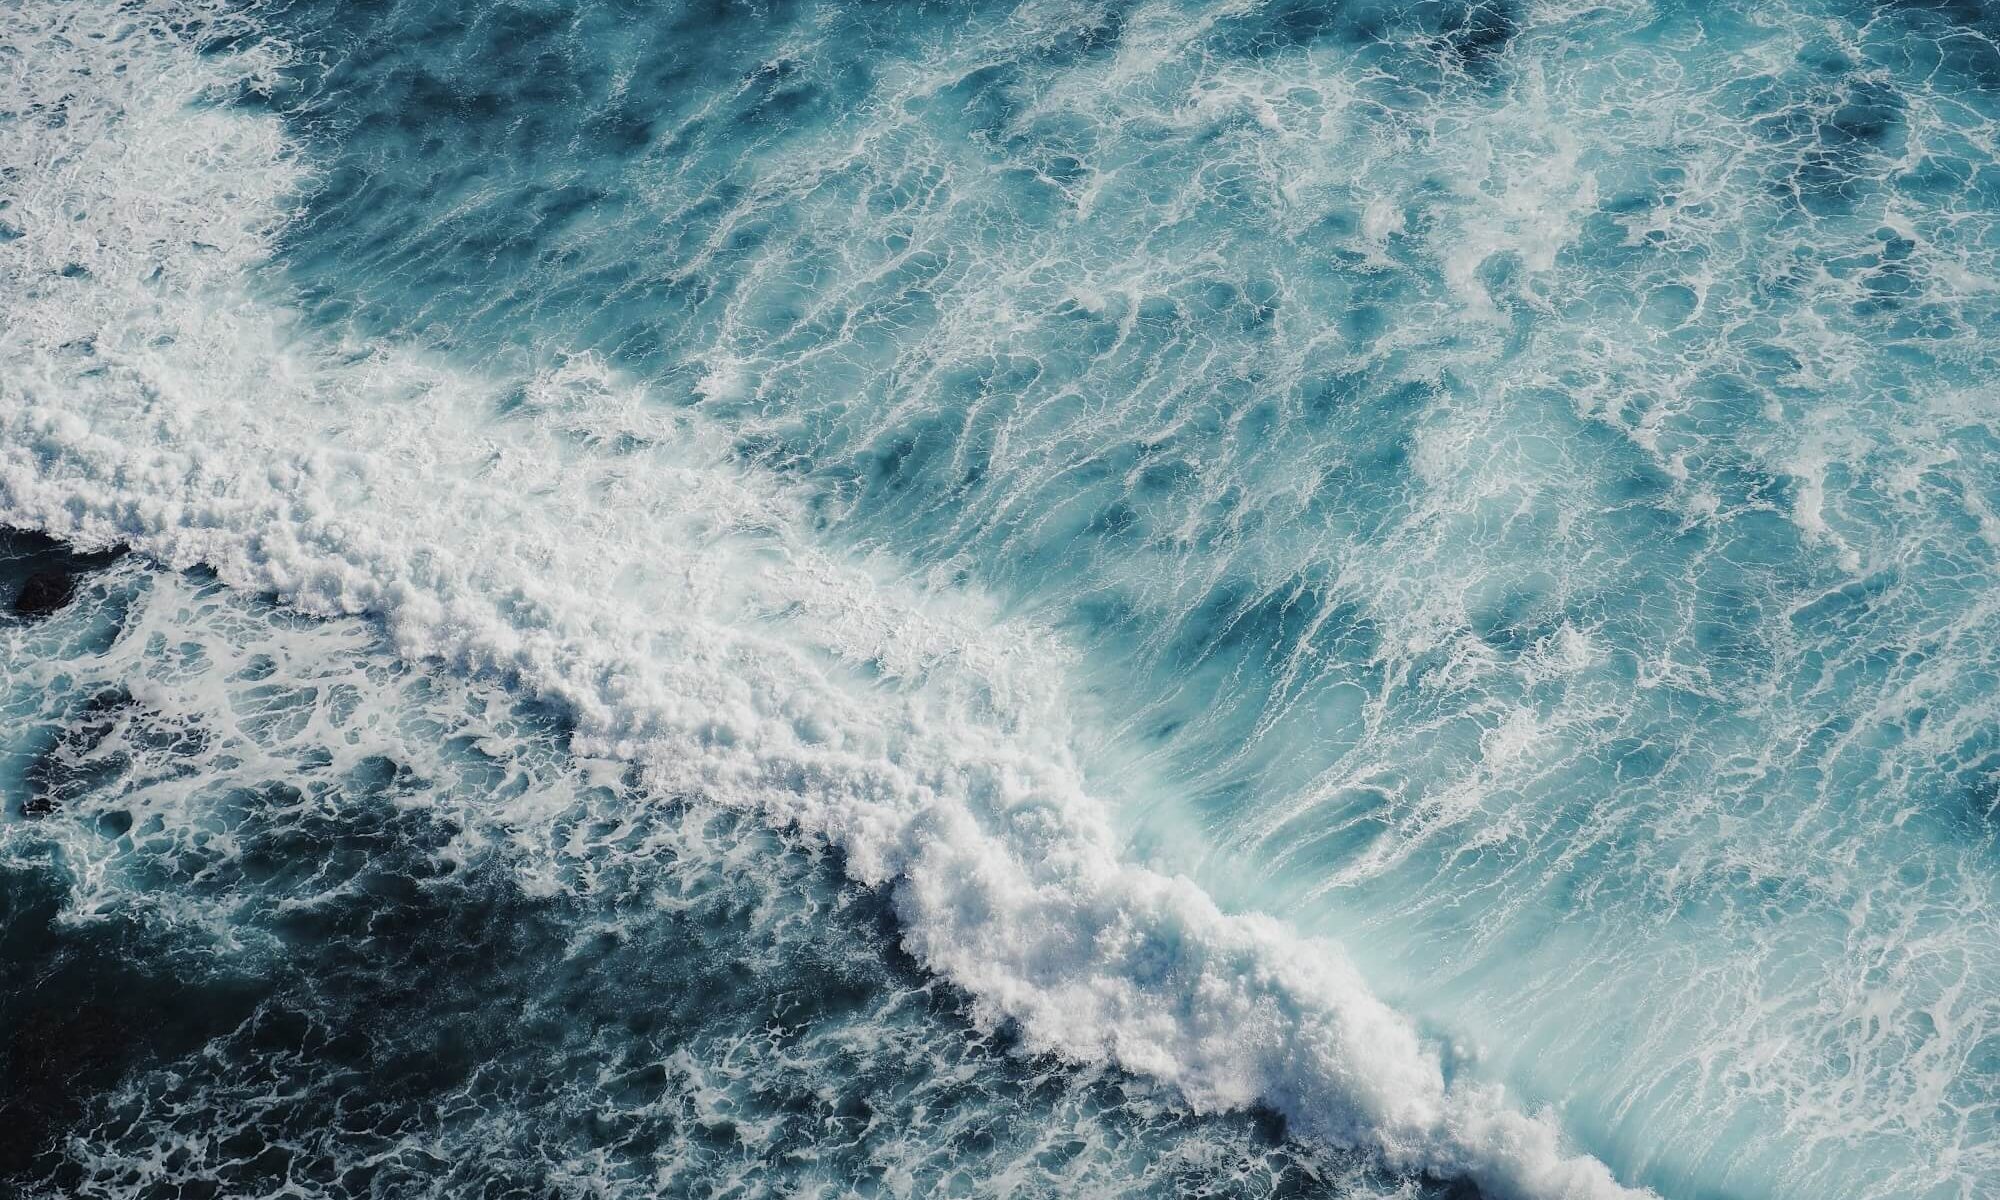 foto sob perspectiva de cima das ondas batendo no mar